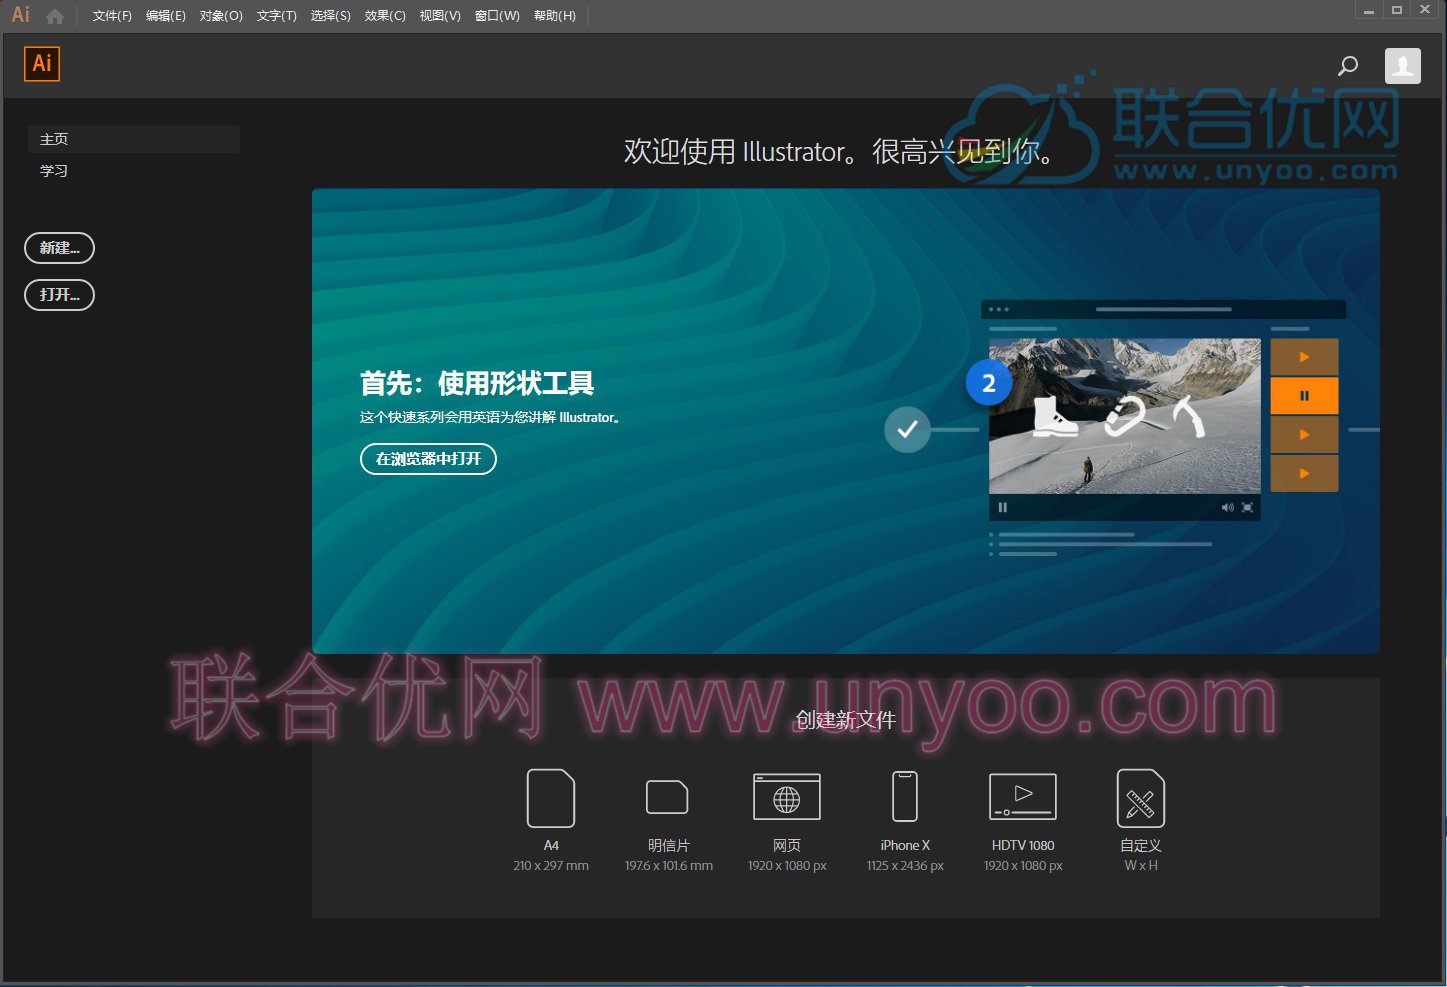 Adobe Illustrator CC 2019 v23.0 Win/Mac 多语言中文正式注册版